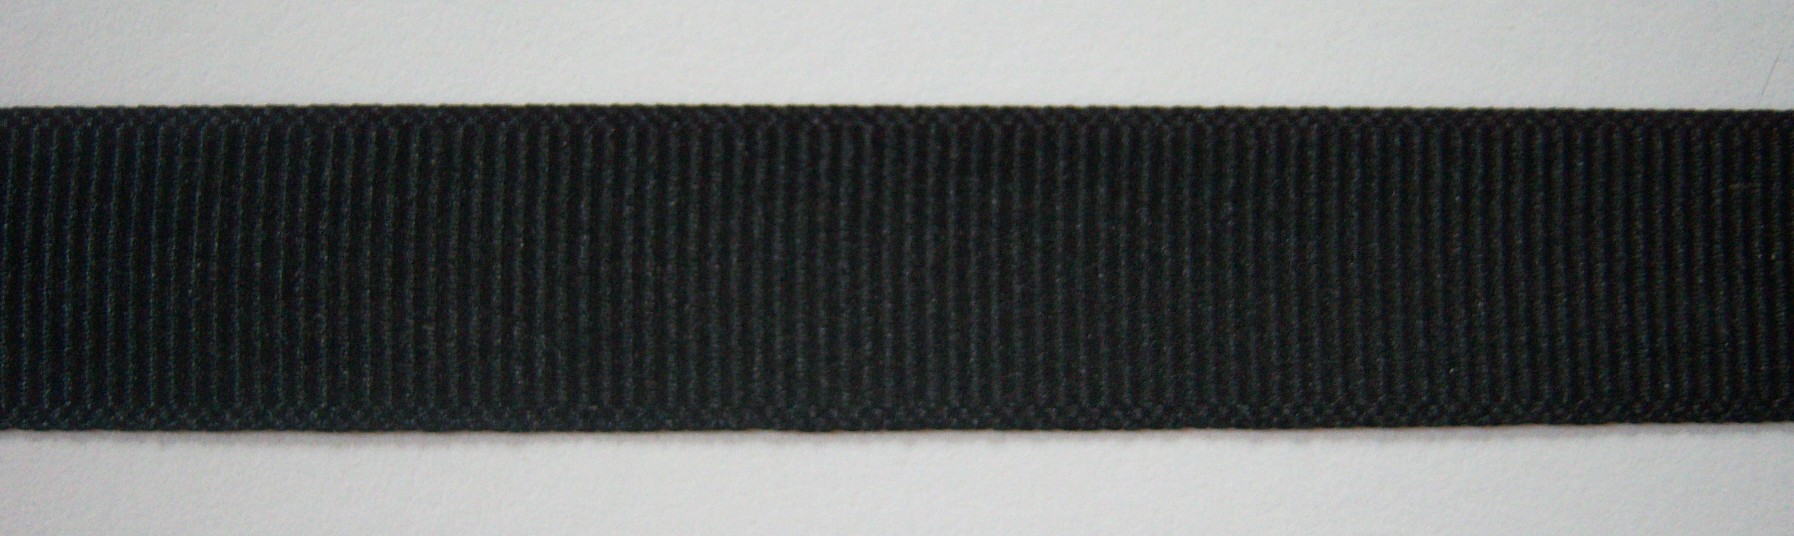 Black 5/8" Grosgrain Ribbon